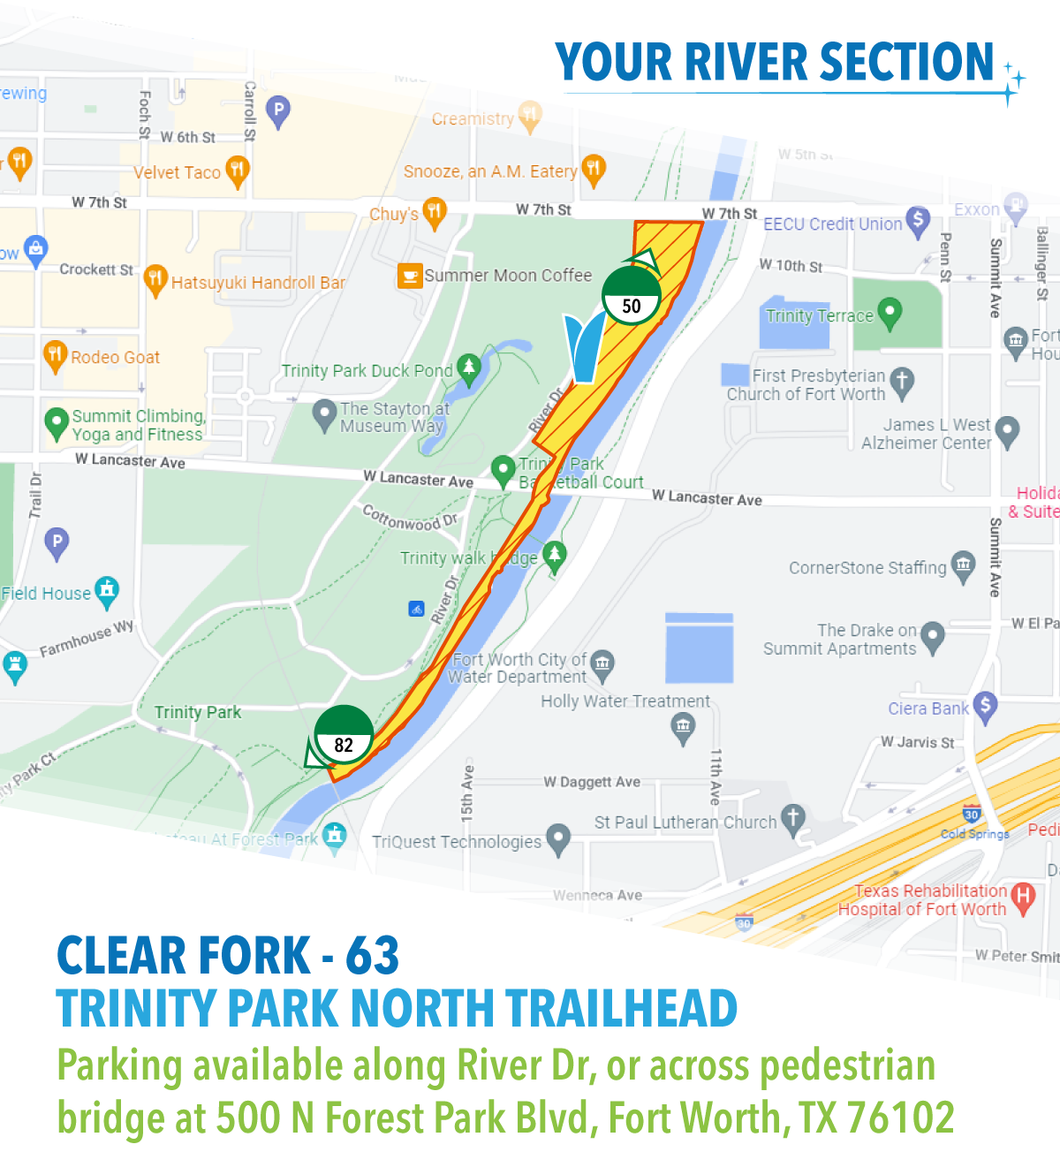 Section 63 – Trinity Park North Trailhead